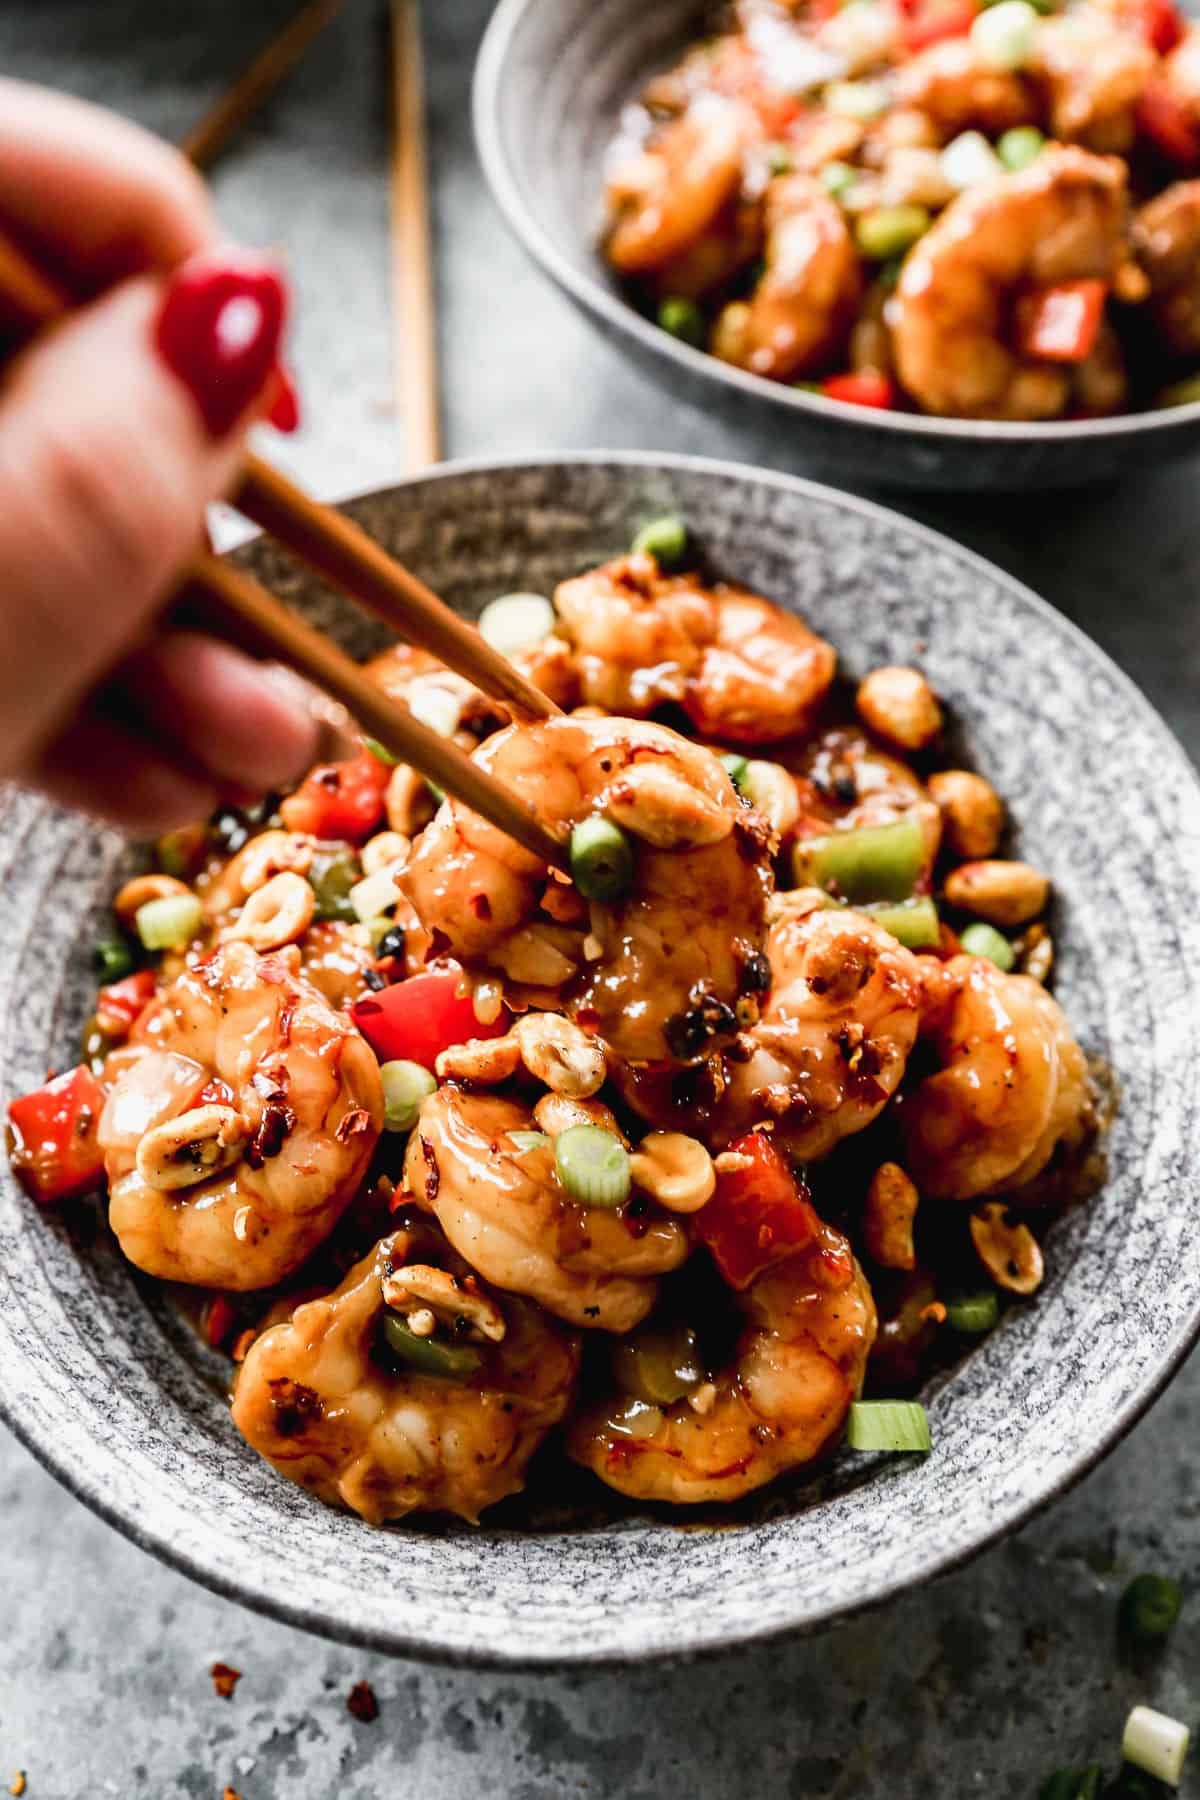 A close-up image of someone lifting a piece of shrimp with chopsticks from a bowl of Kung Pao Shrimp.